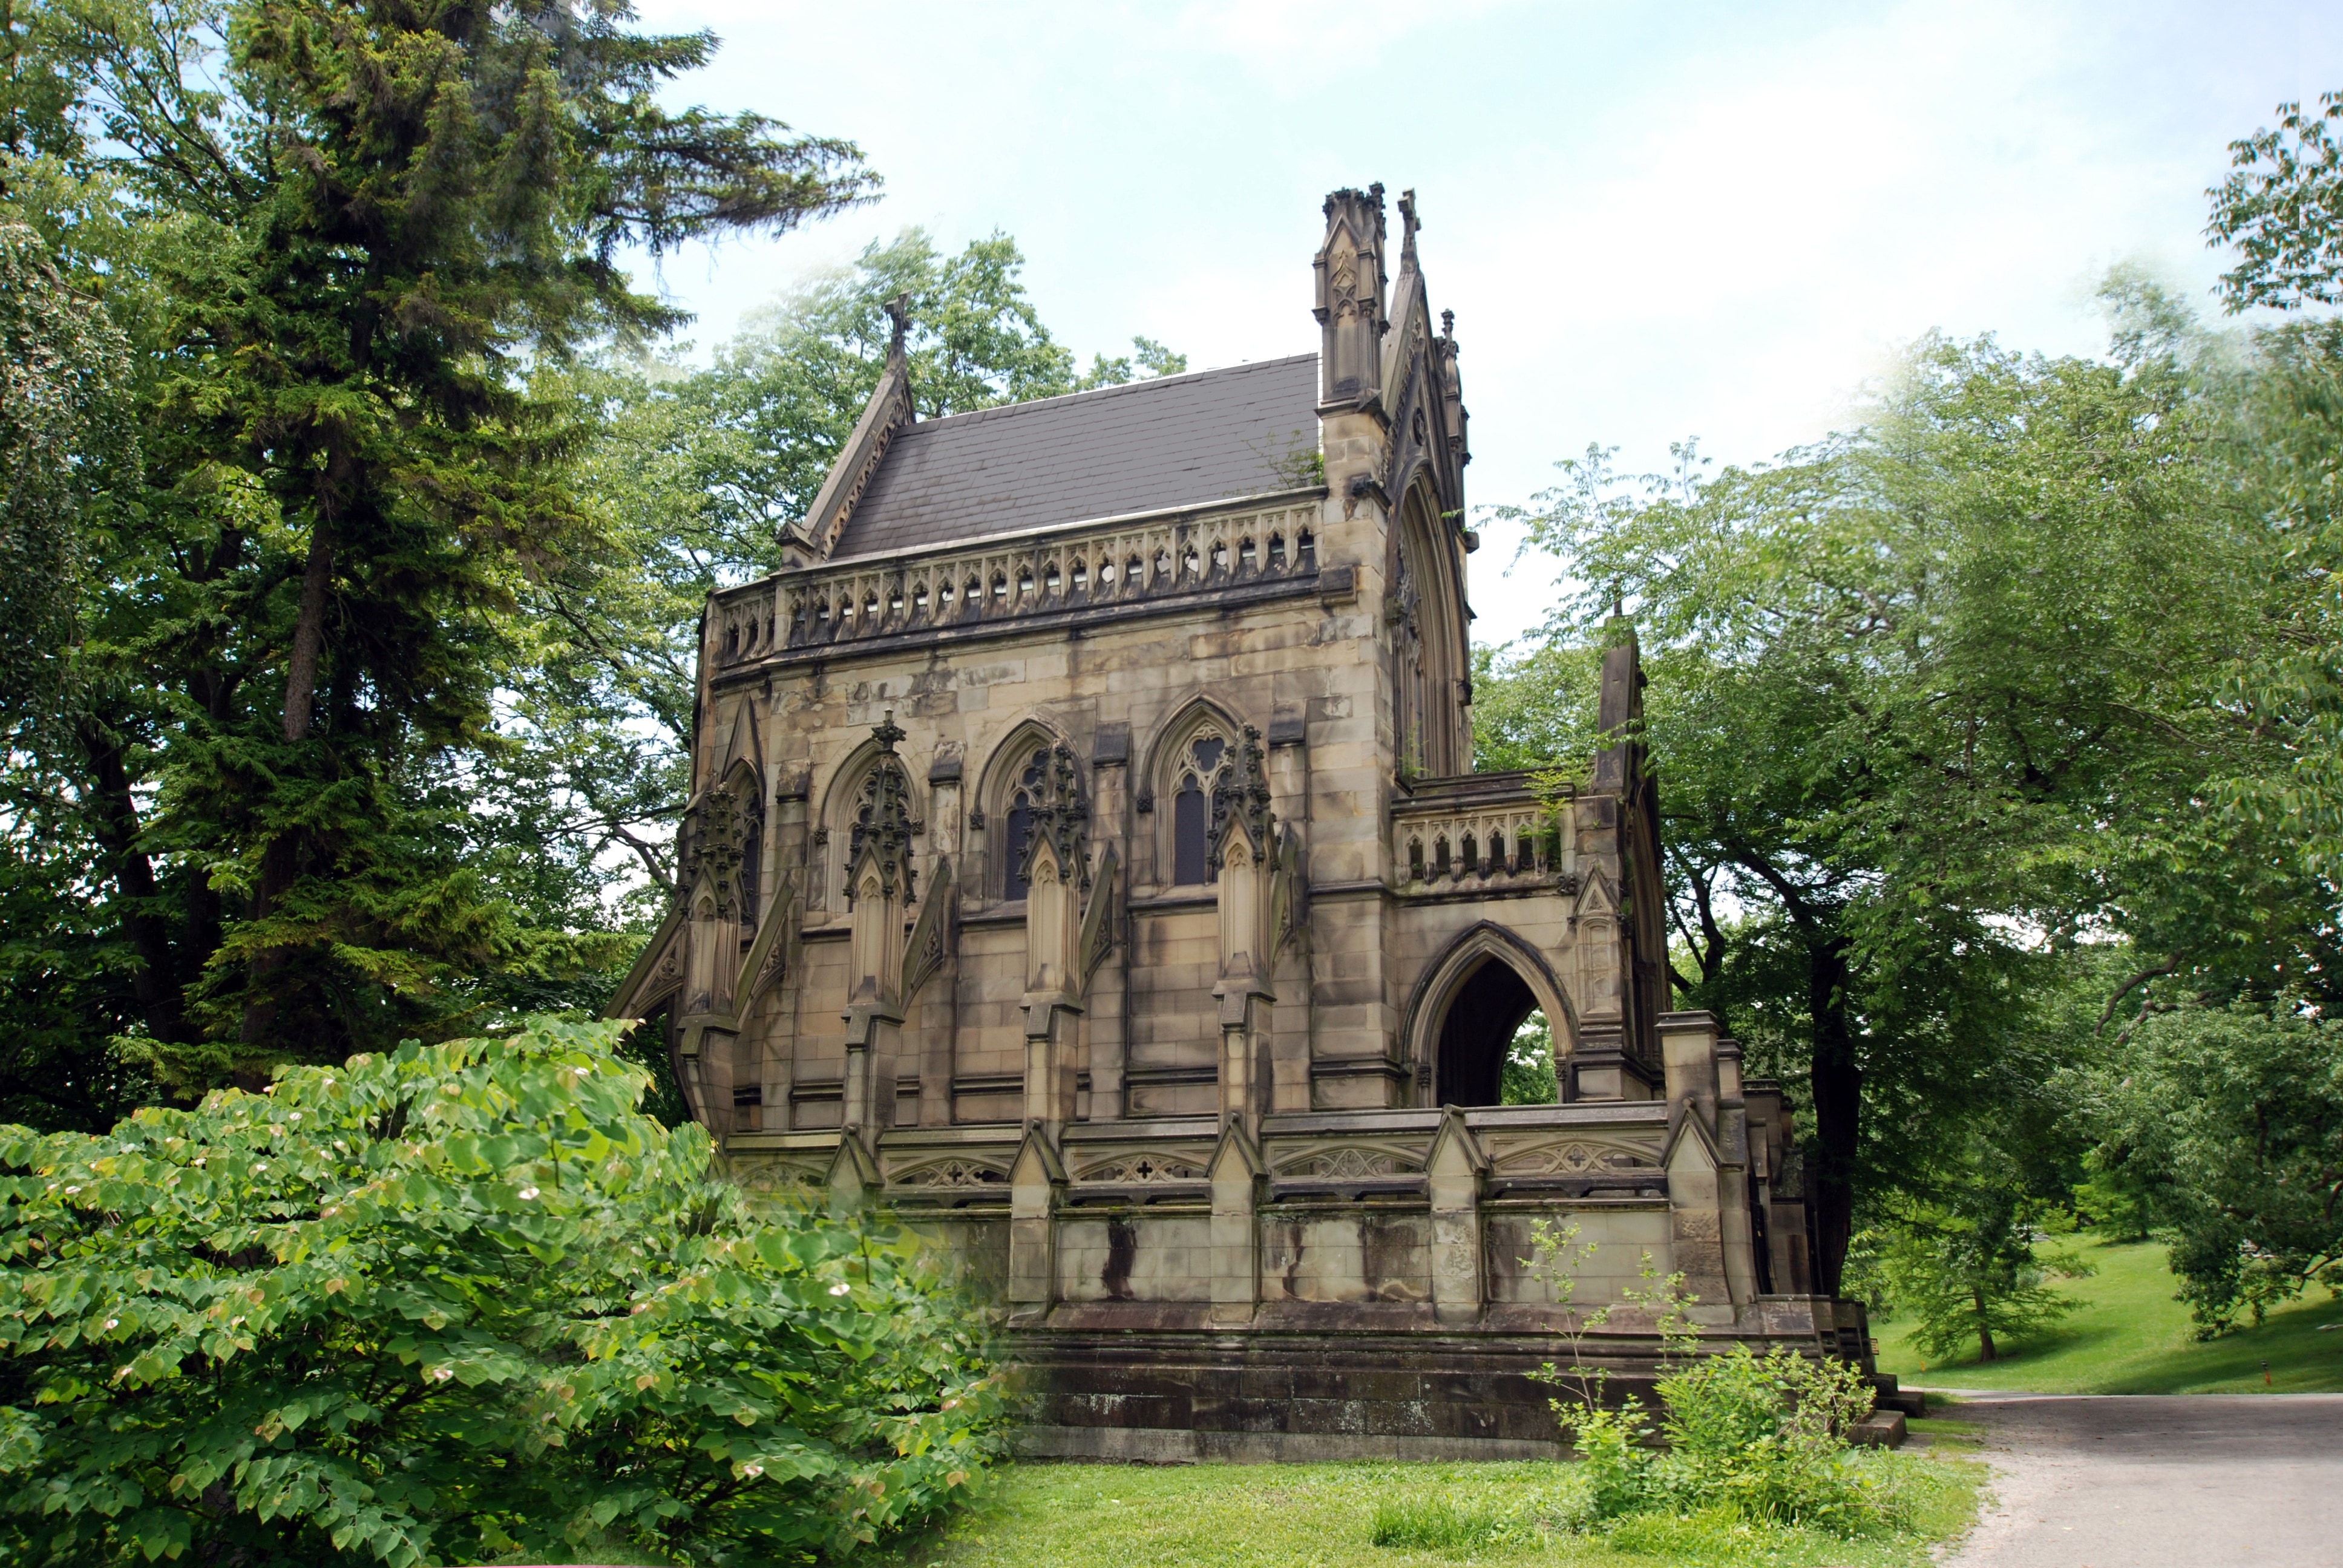 Structure, Dexter Mausoleum, Cemetery, tree, history